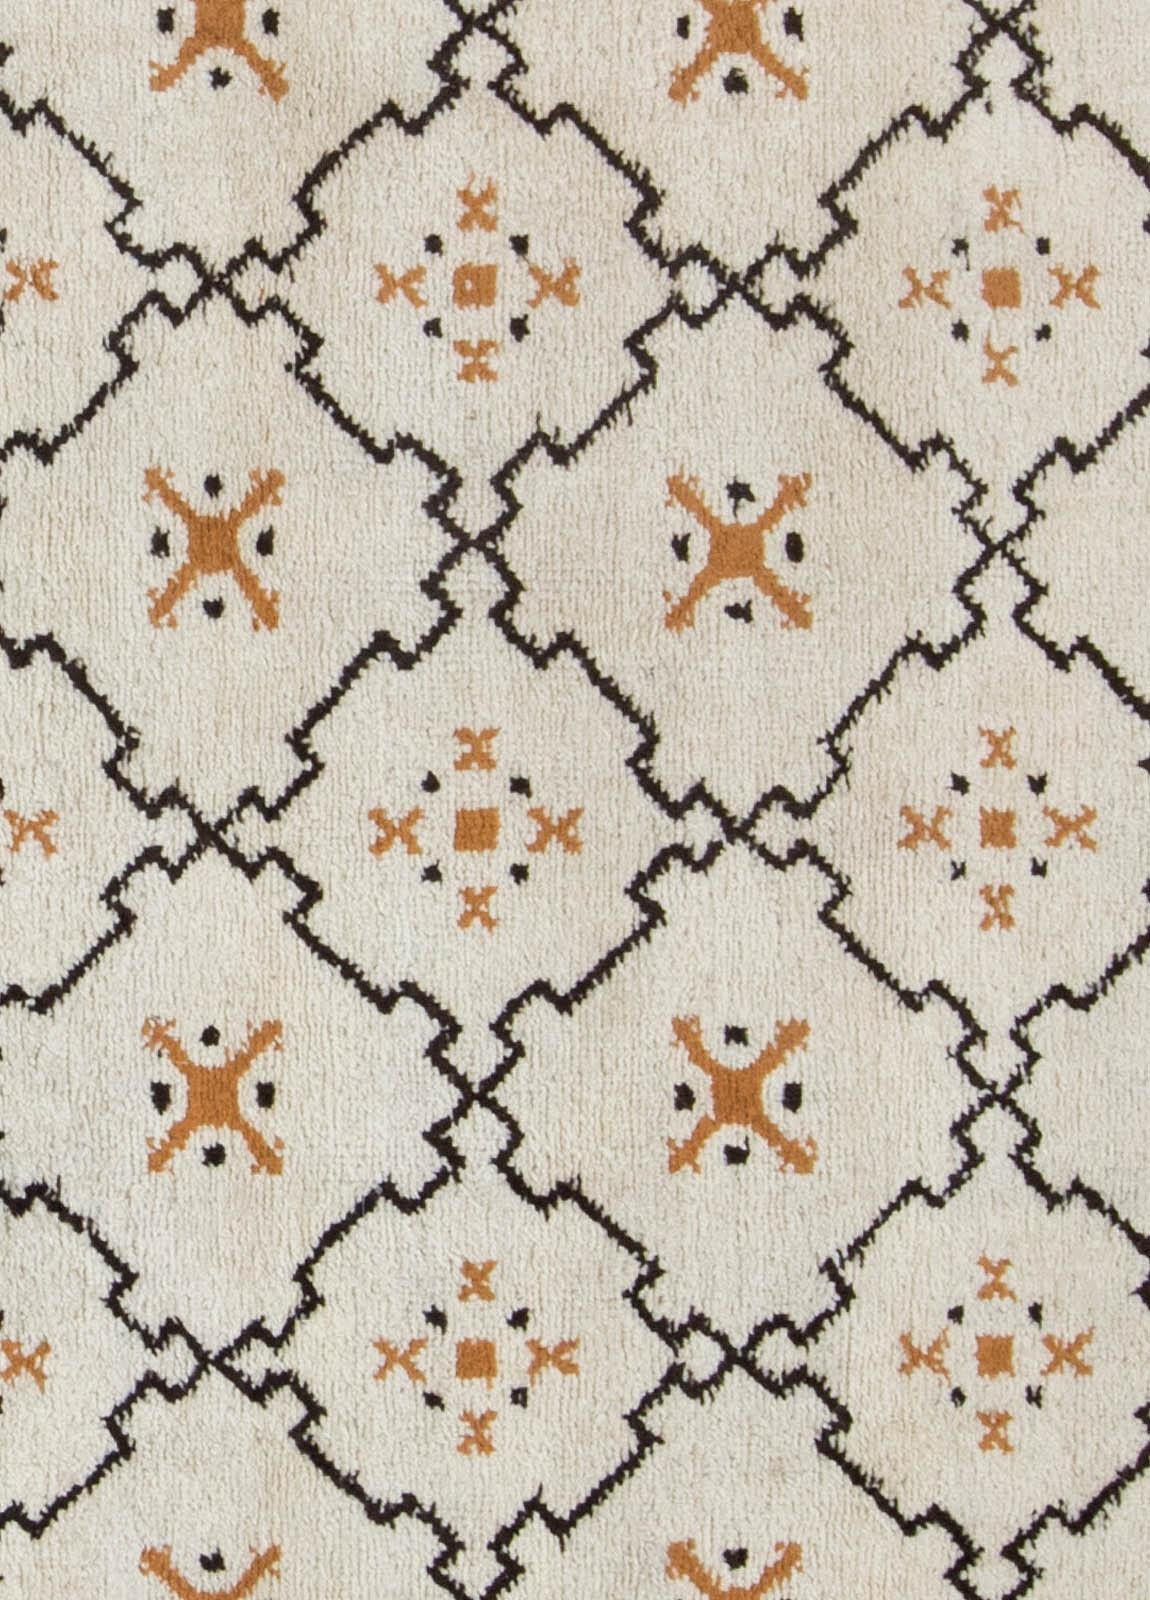 Vintage Moroccan rug
Size: 11'3